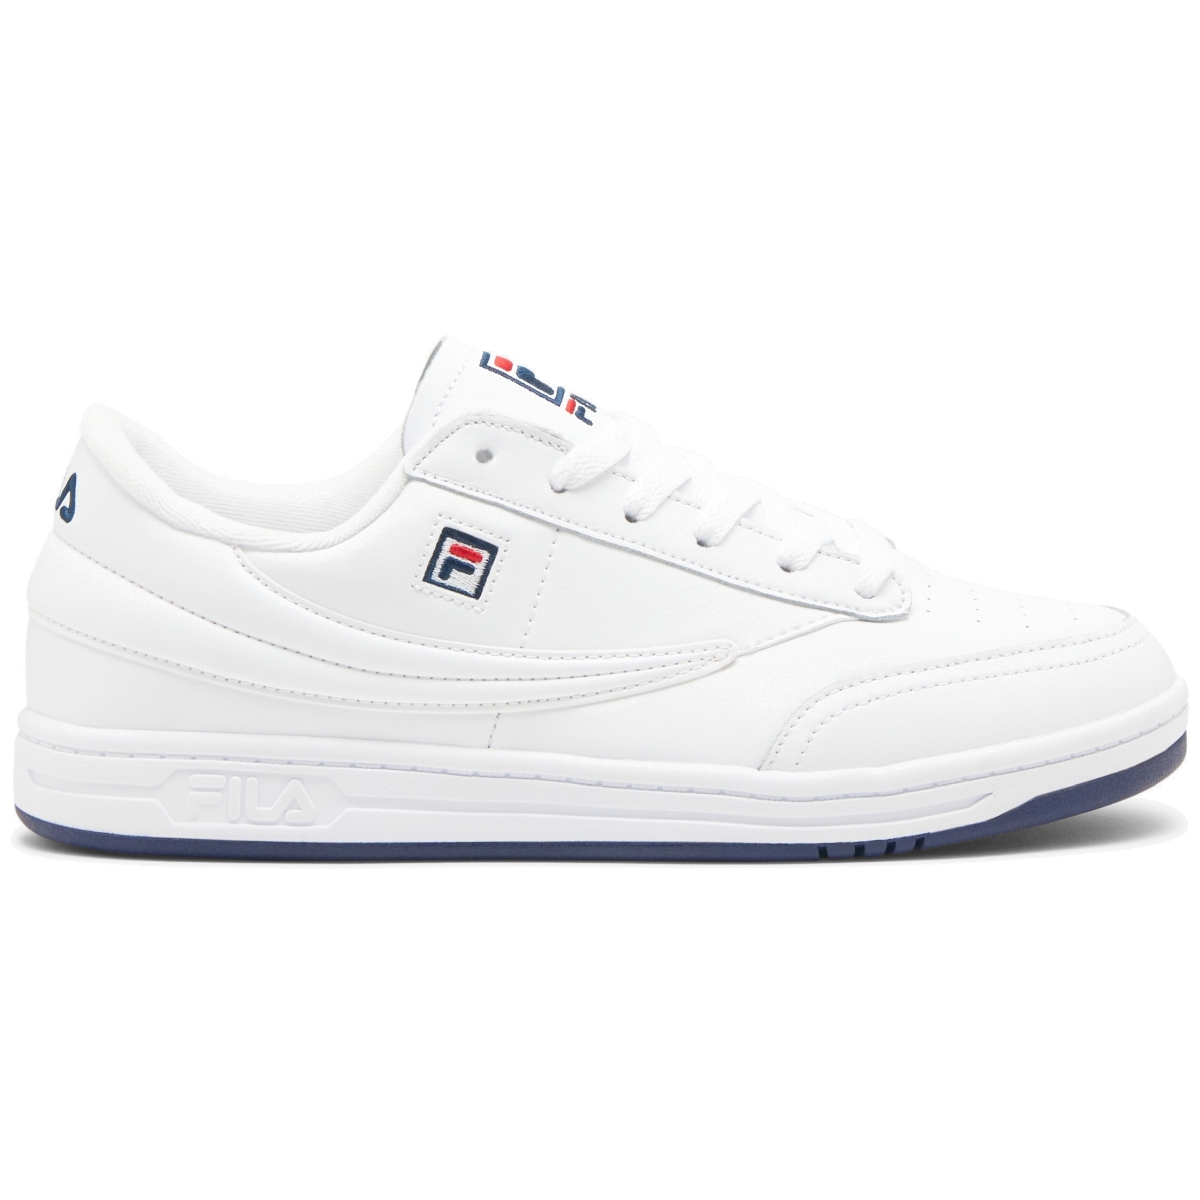 Fila Men's Tennis 88 Tennis Shoes (White/Navy/Red)